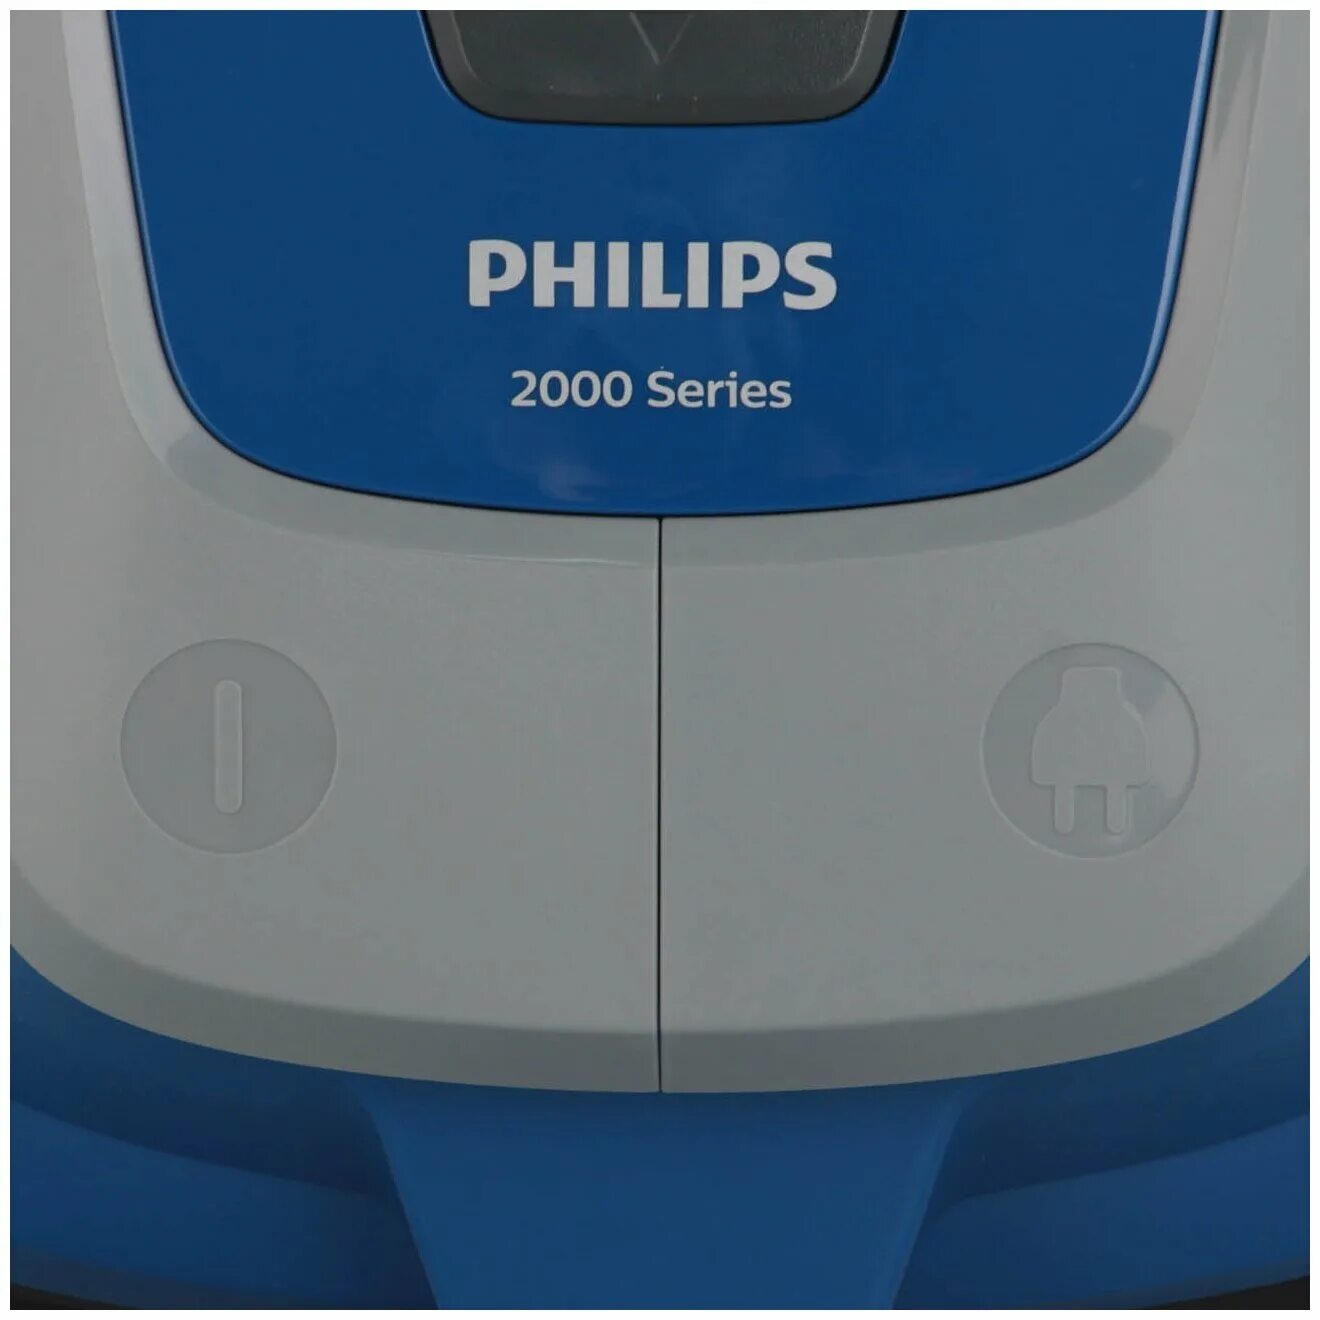 Пылесос Philips xb2062/01. Philips xb2022/xb2023. Пылесос Philips xb2022. Пылесос с контейнером для пыли Philips xb2062/01.